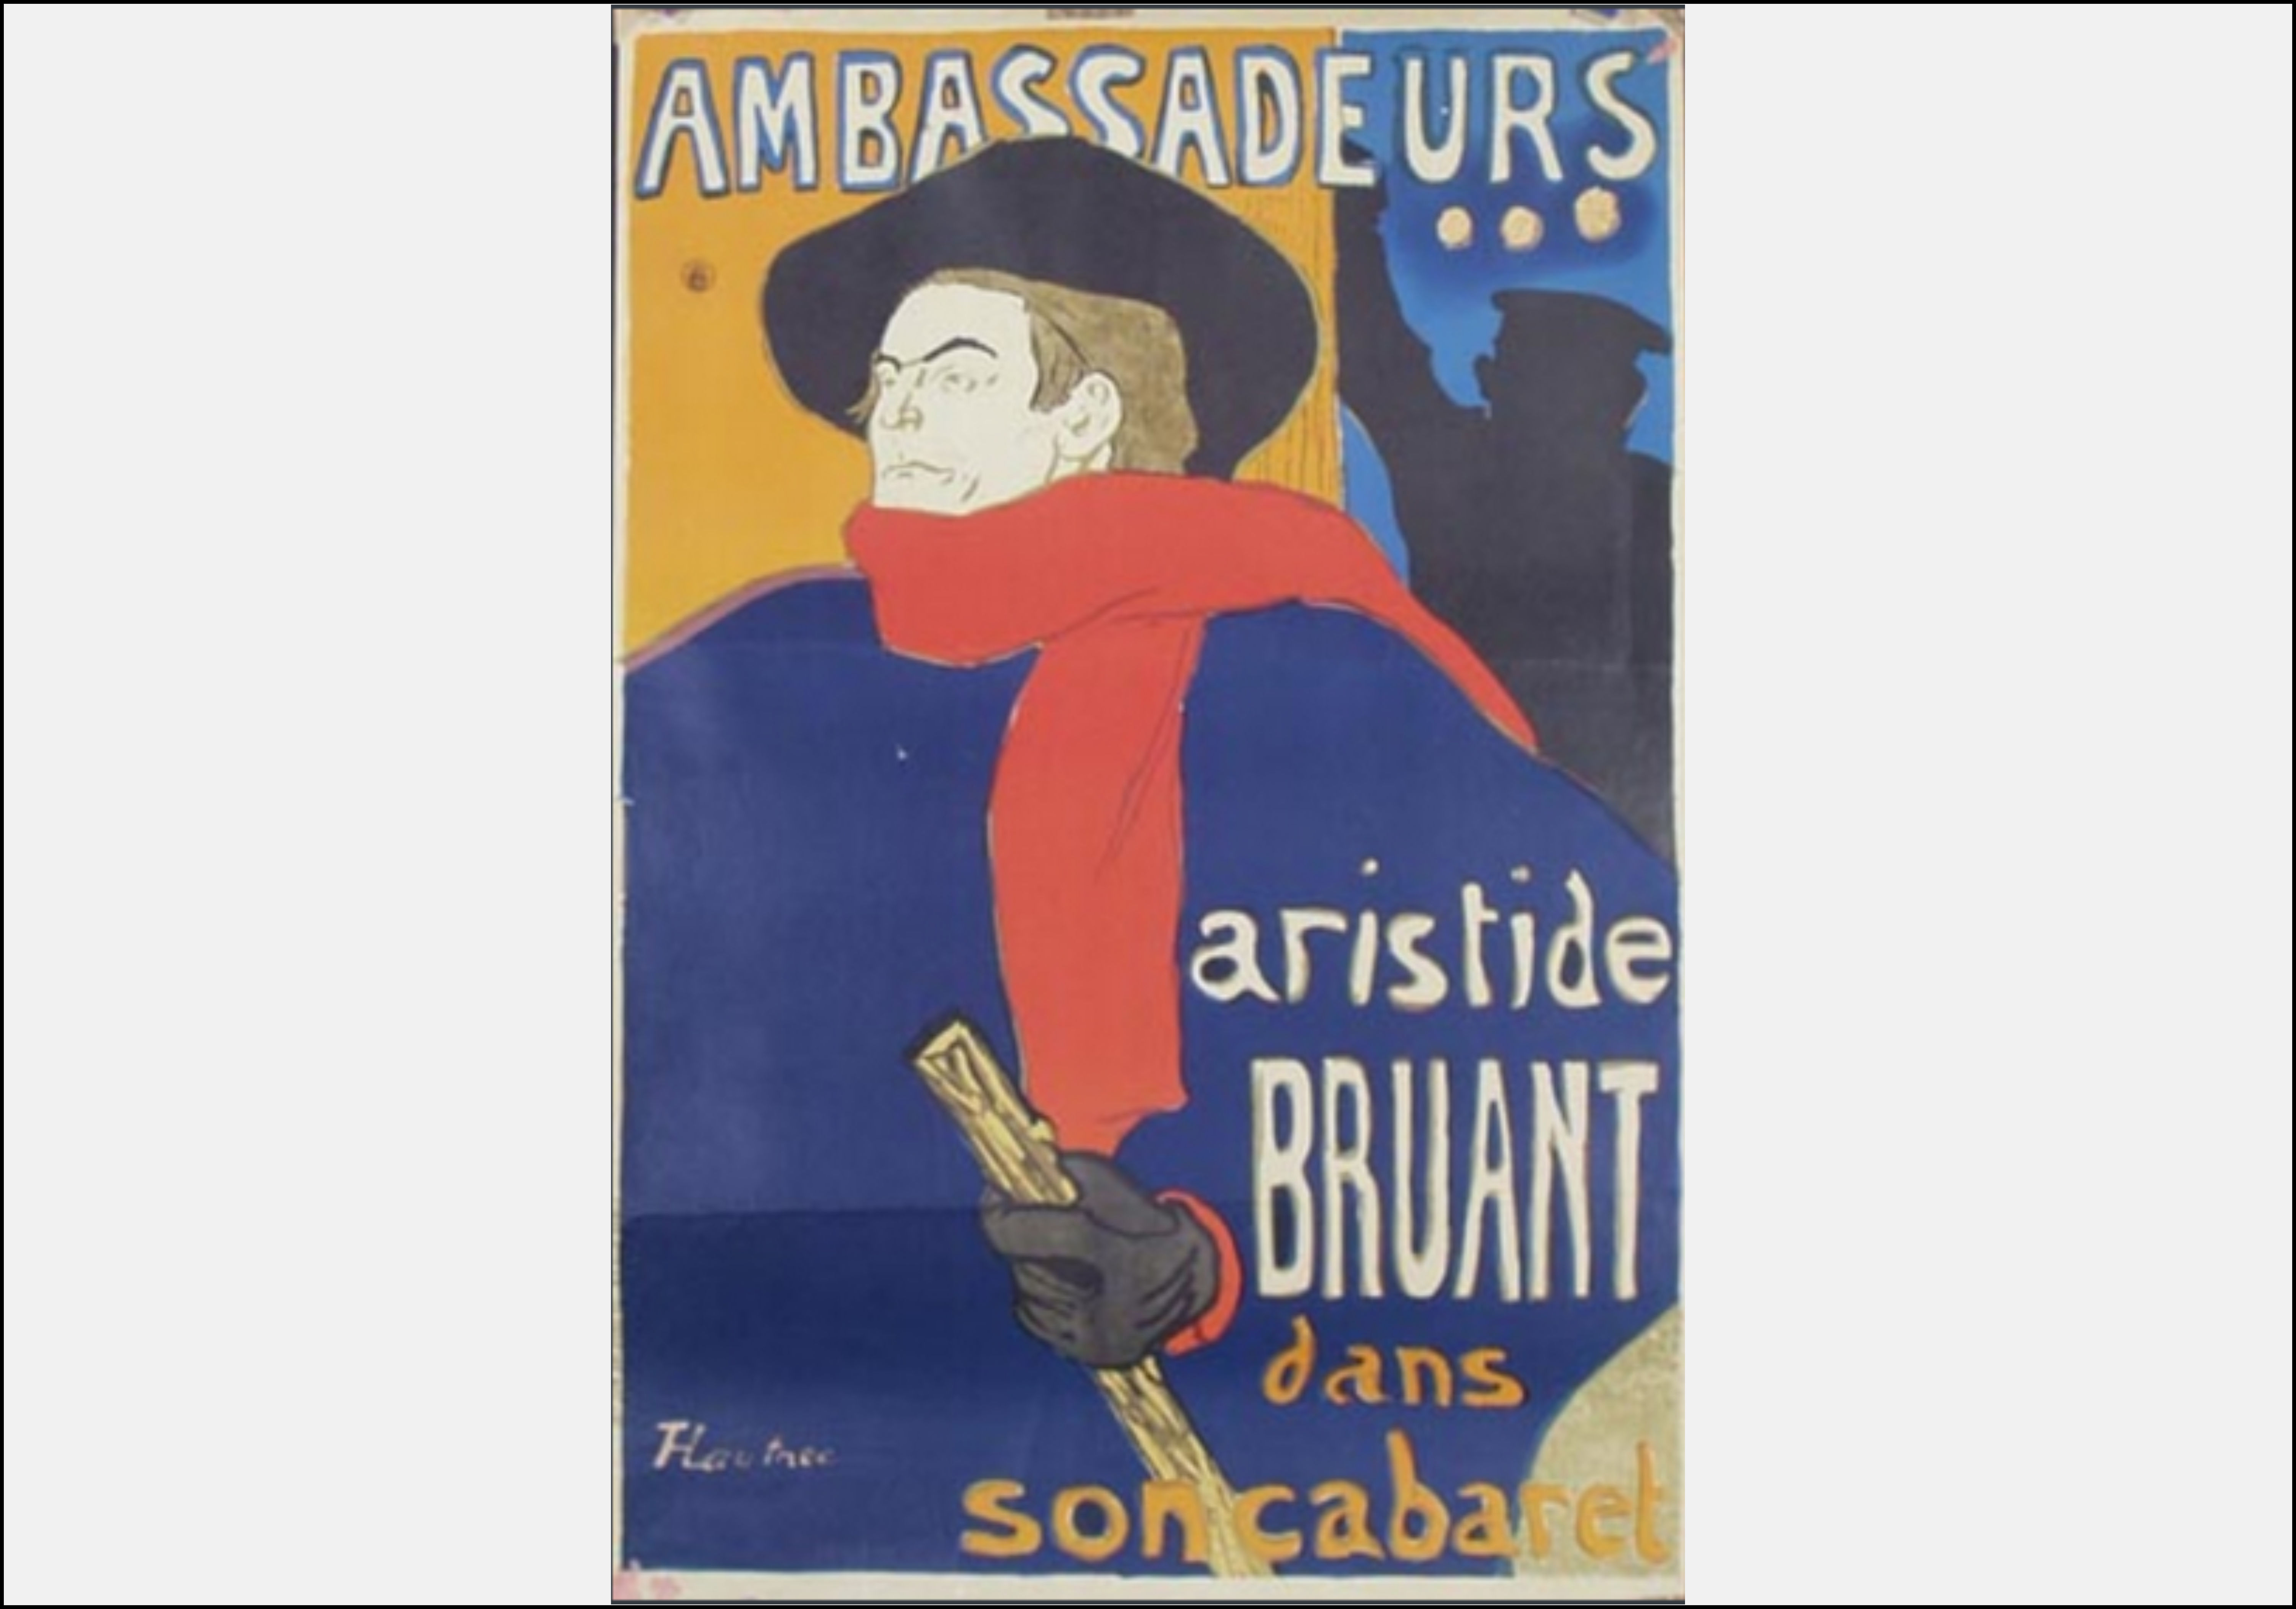 Ambasadeurs-Lautrec